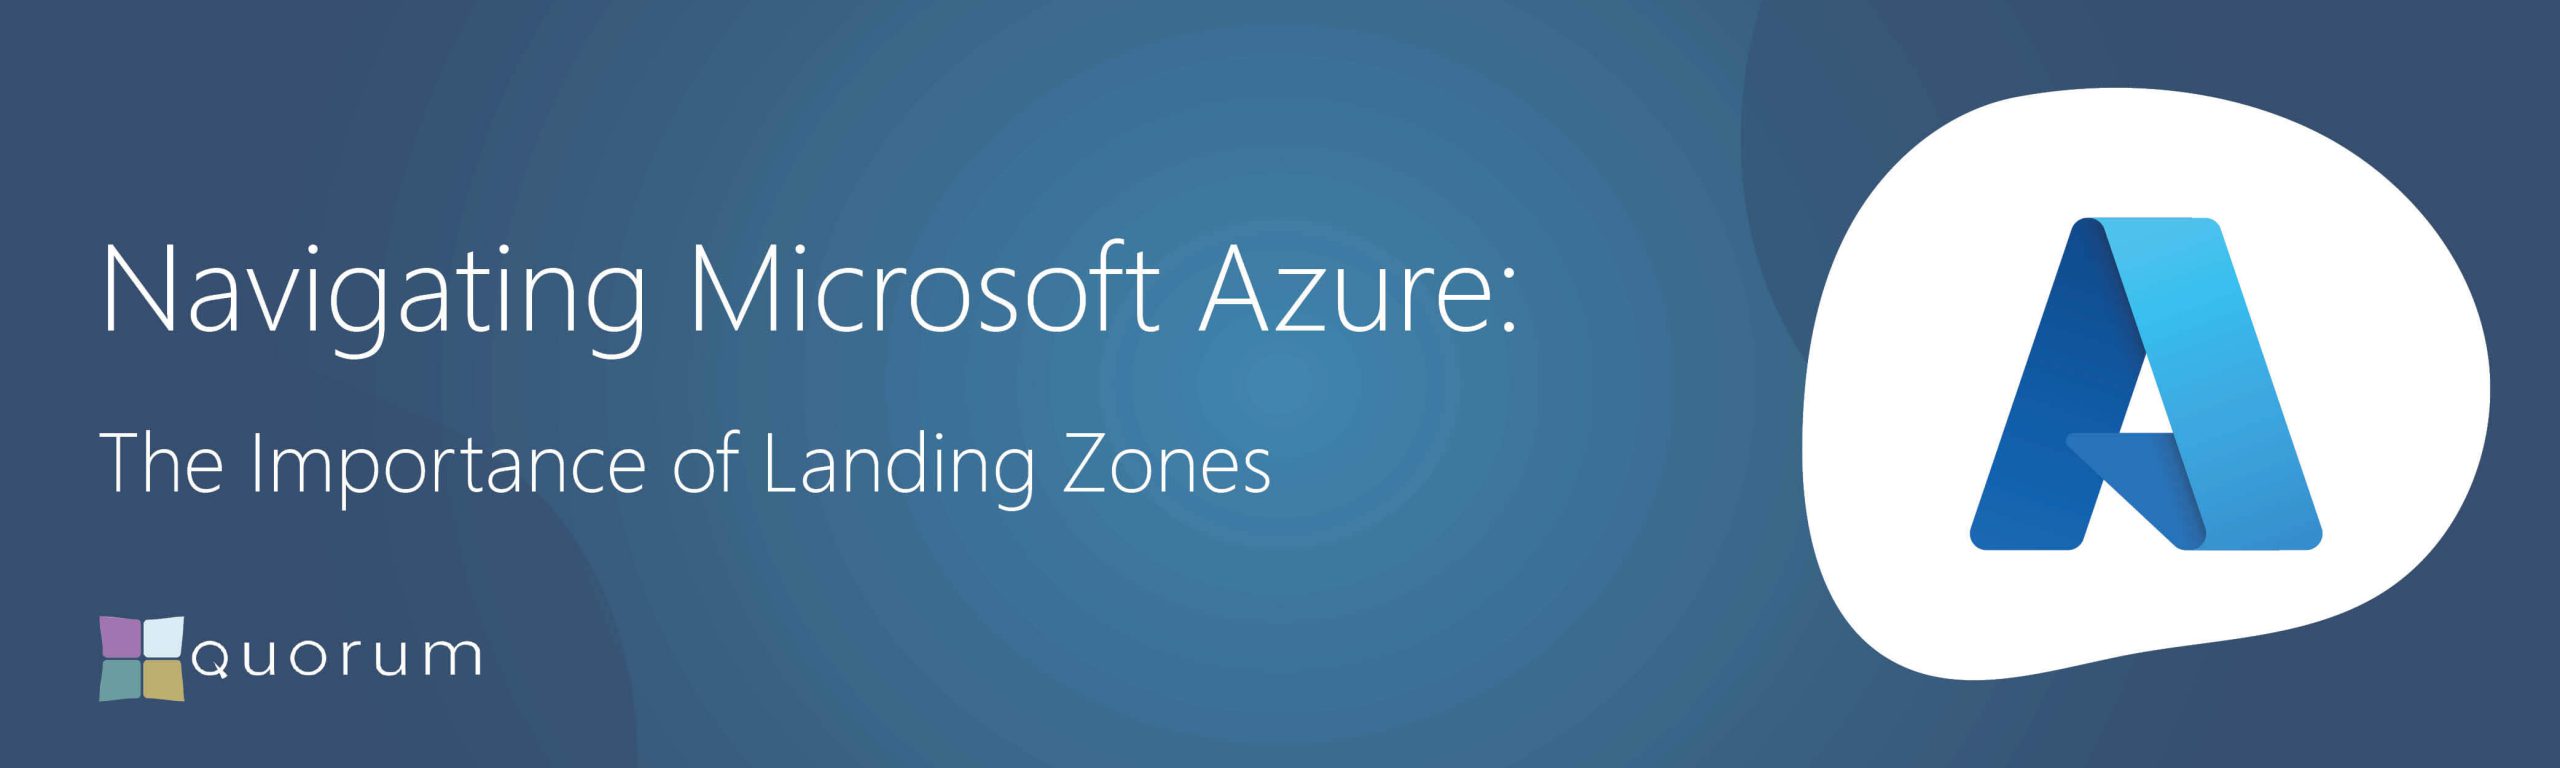 Navigating Azure - The Importance of Landing Zones Website Header